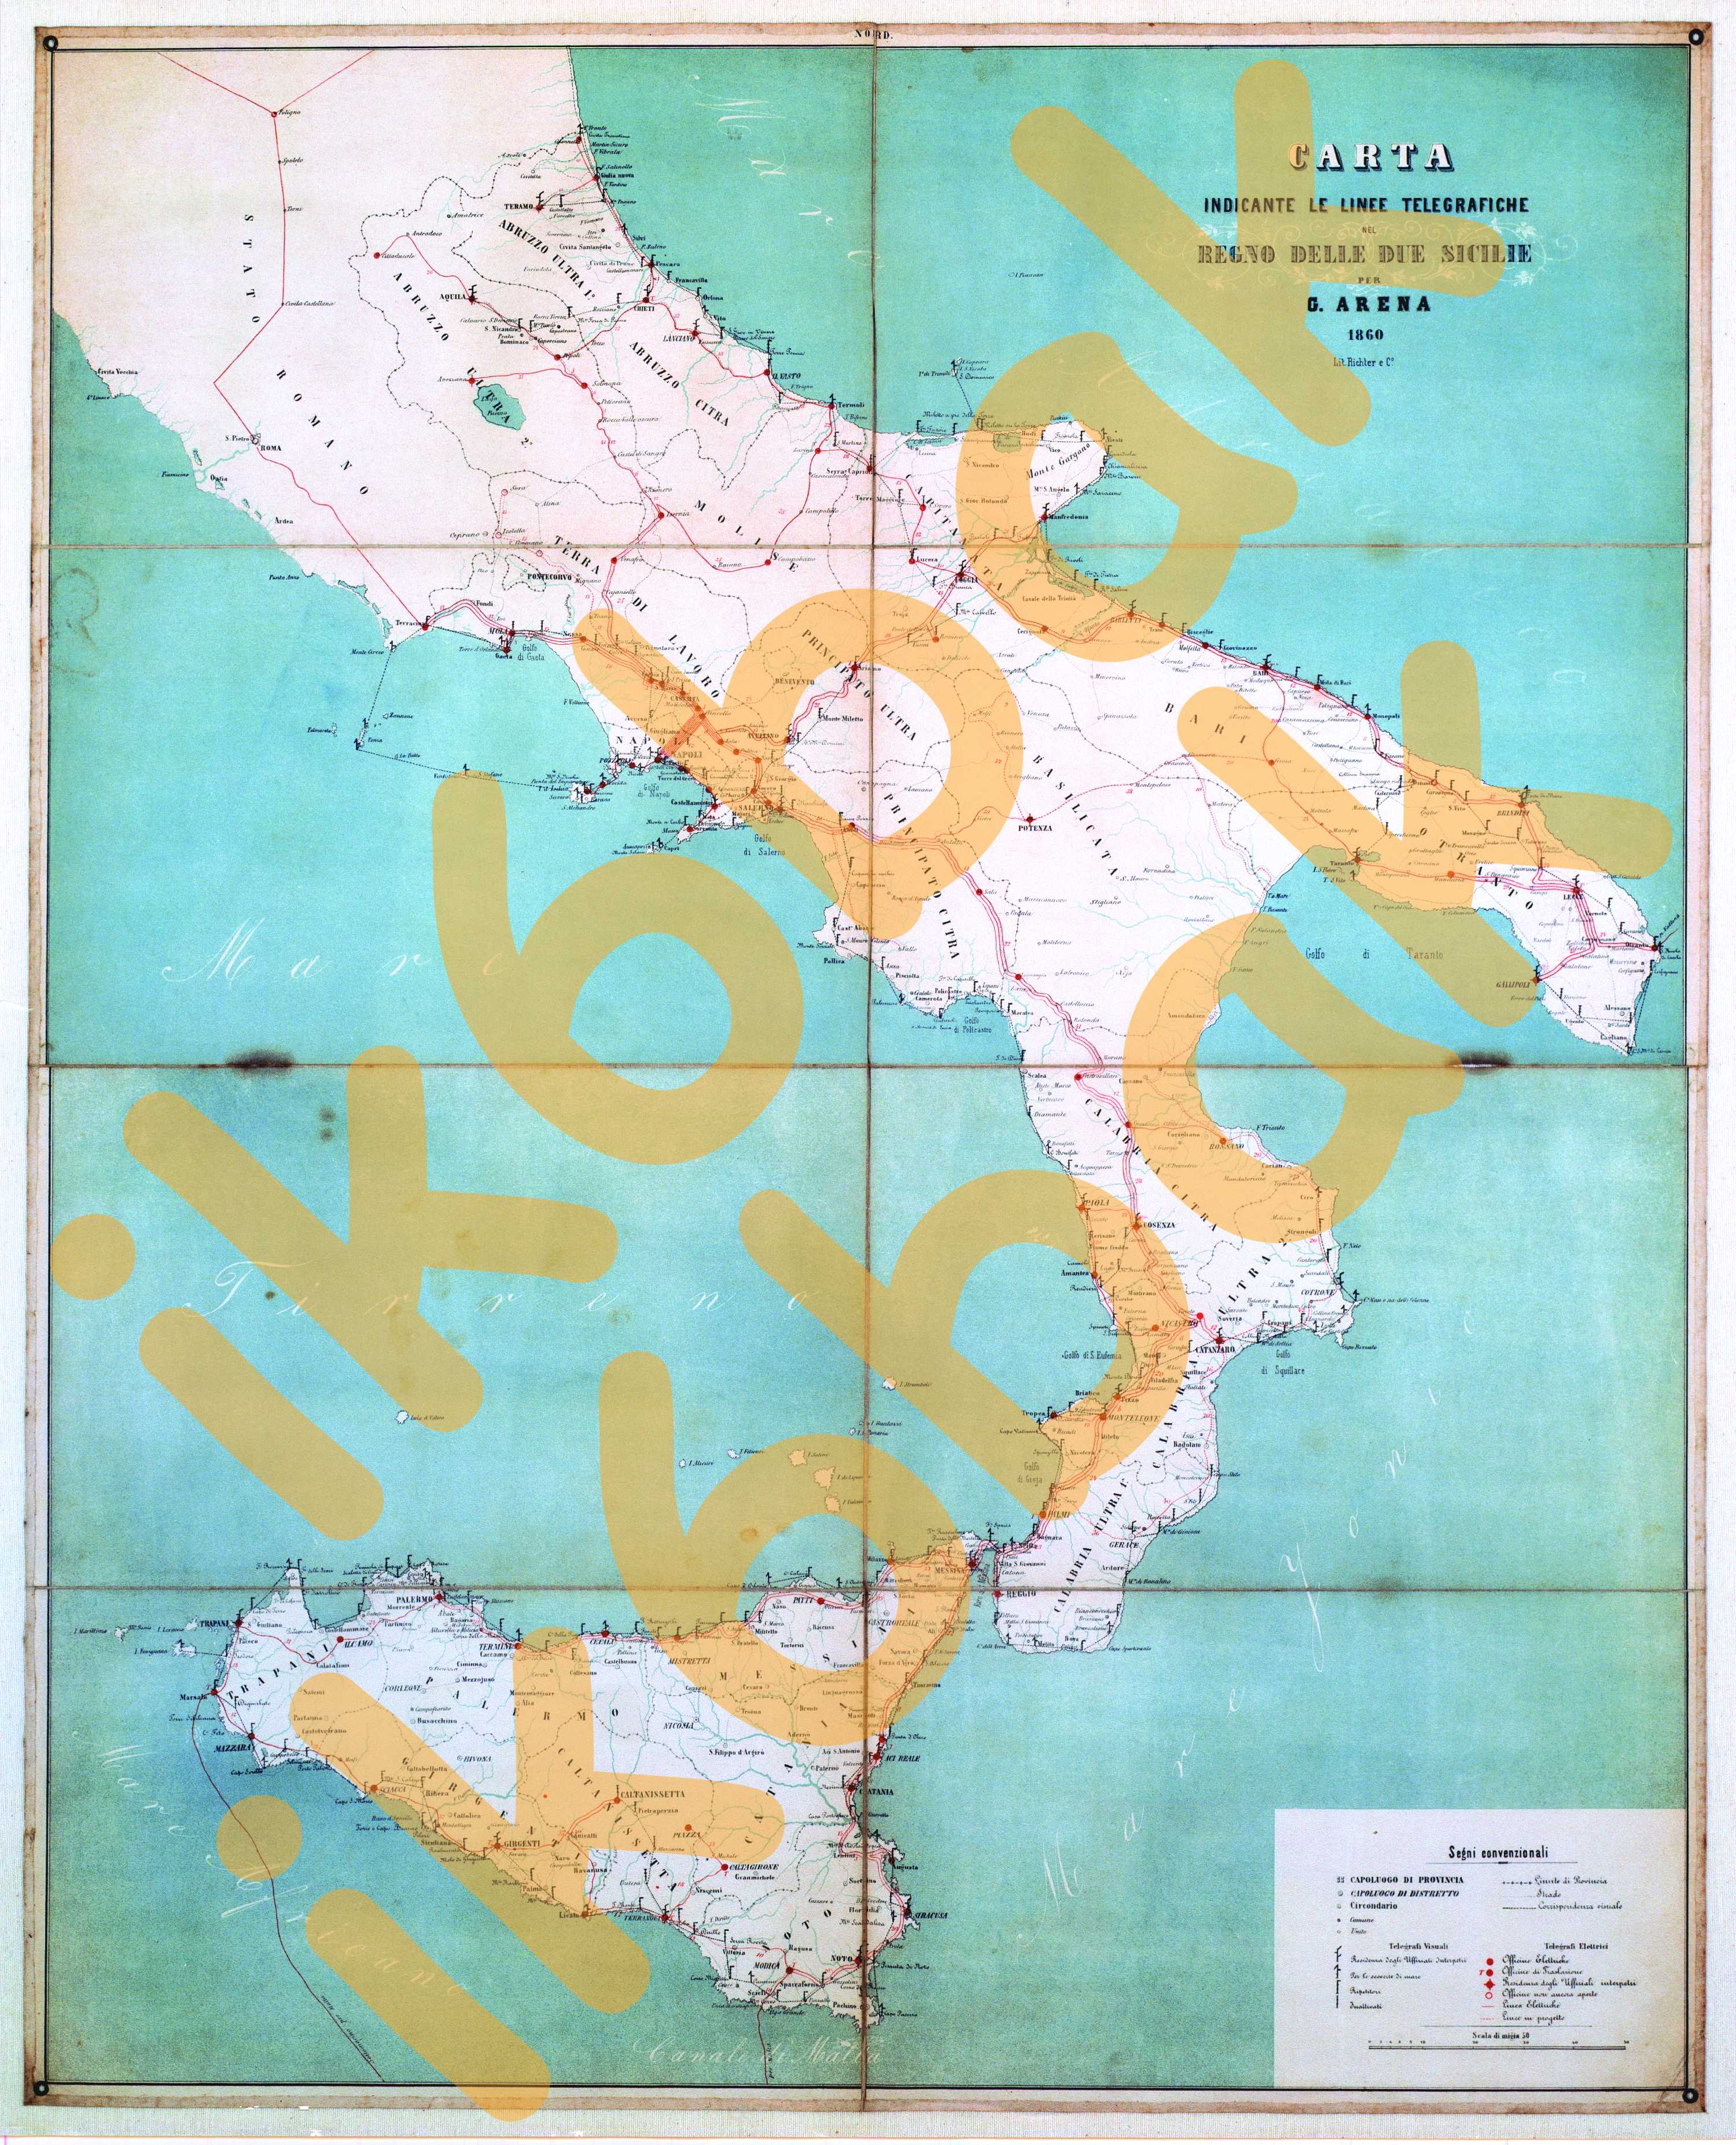 Cartina telegrafica delle due Sicilie